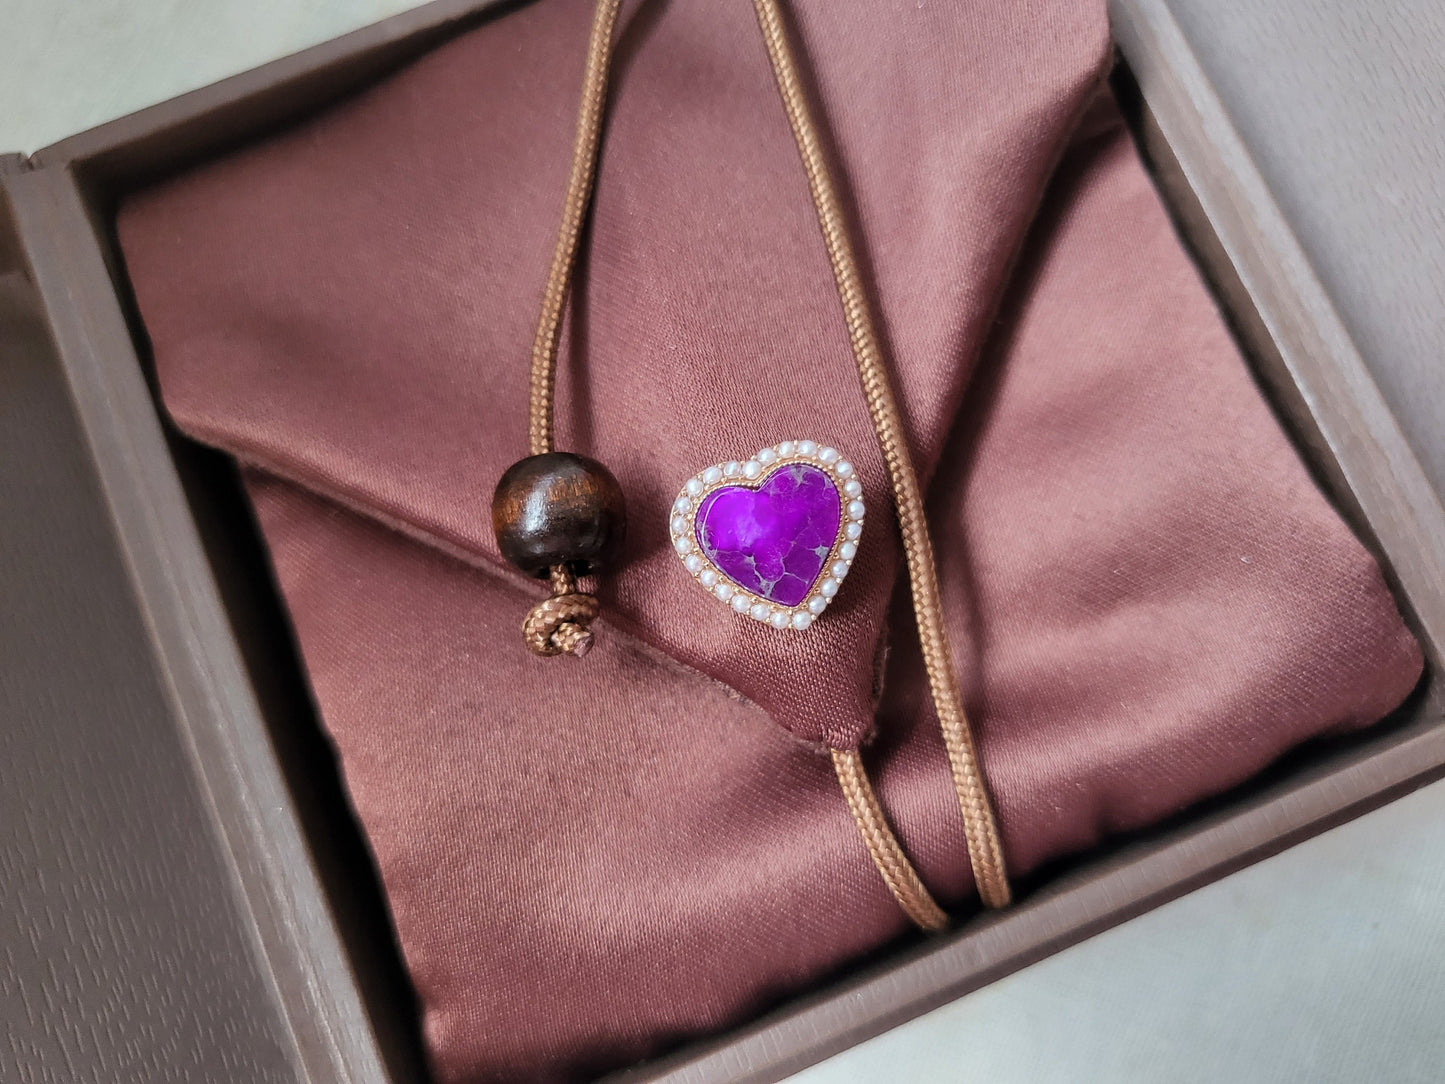 Premium Grade Natural Purple Sugilite Pandora Heart Bead with Pearls